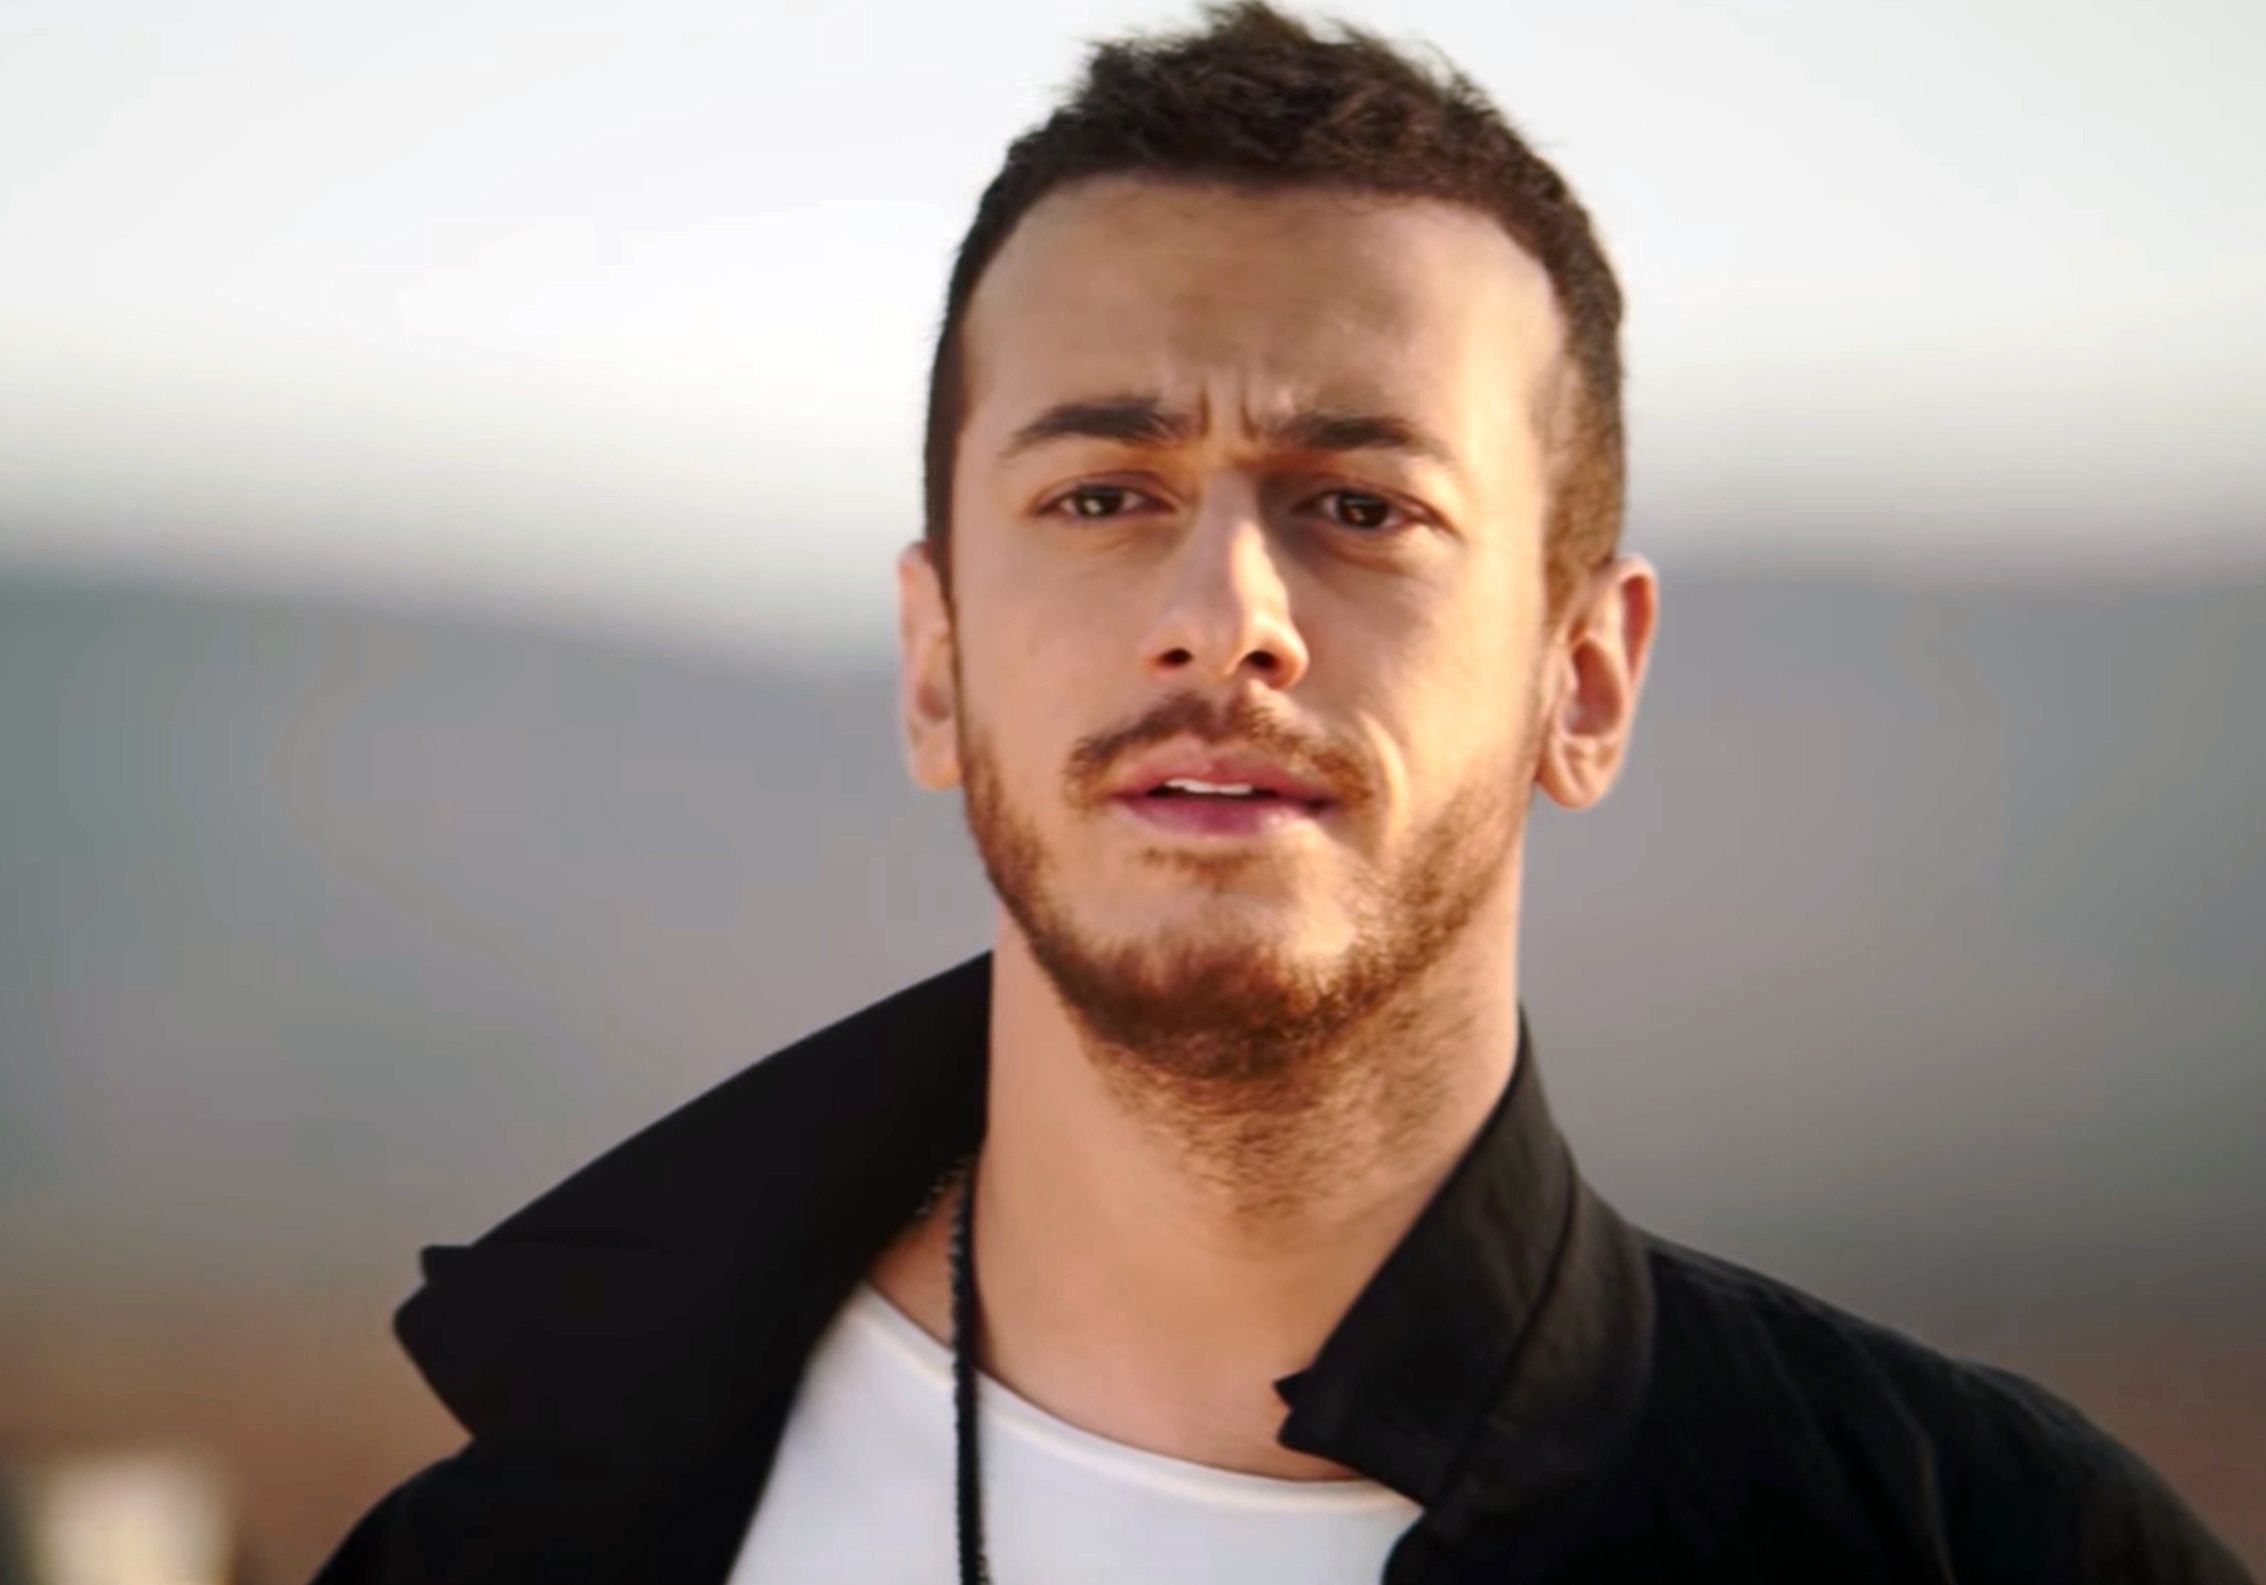 Qui est Saad Lamjarred, la star de la pop marocaine accusée de